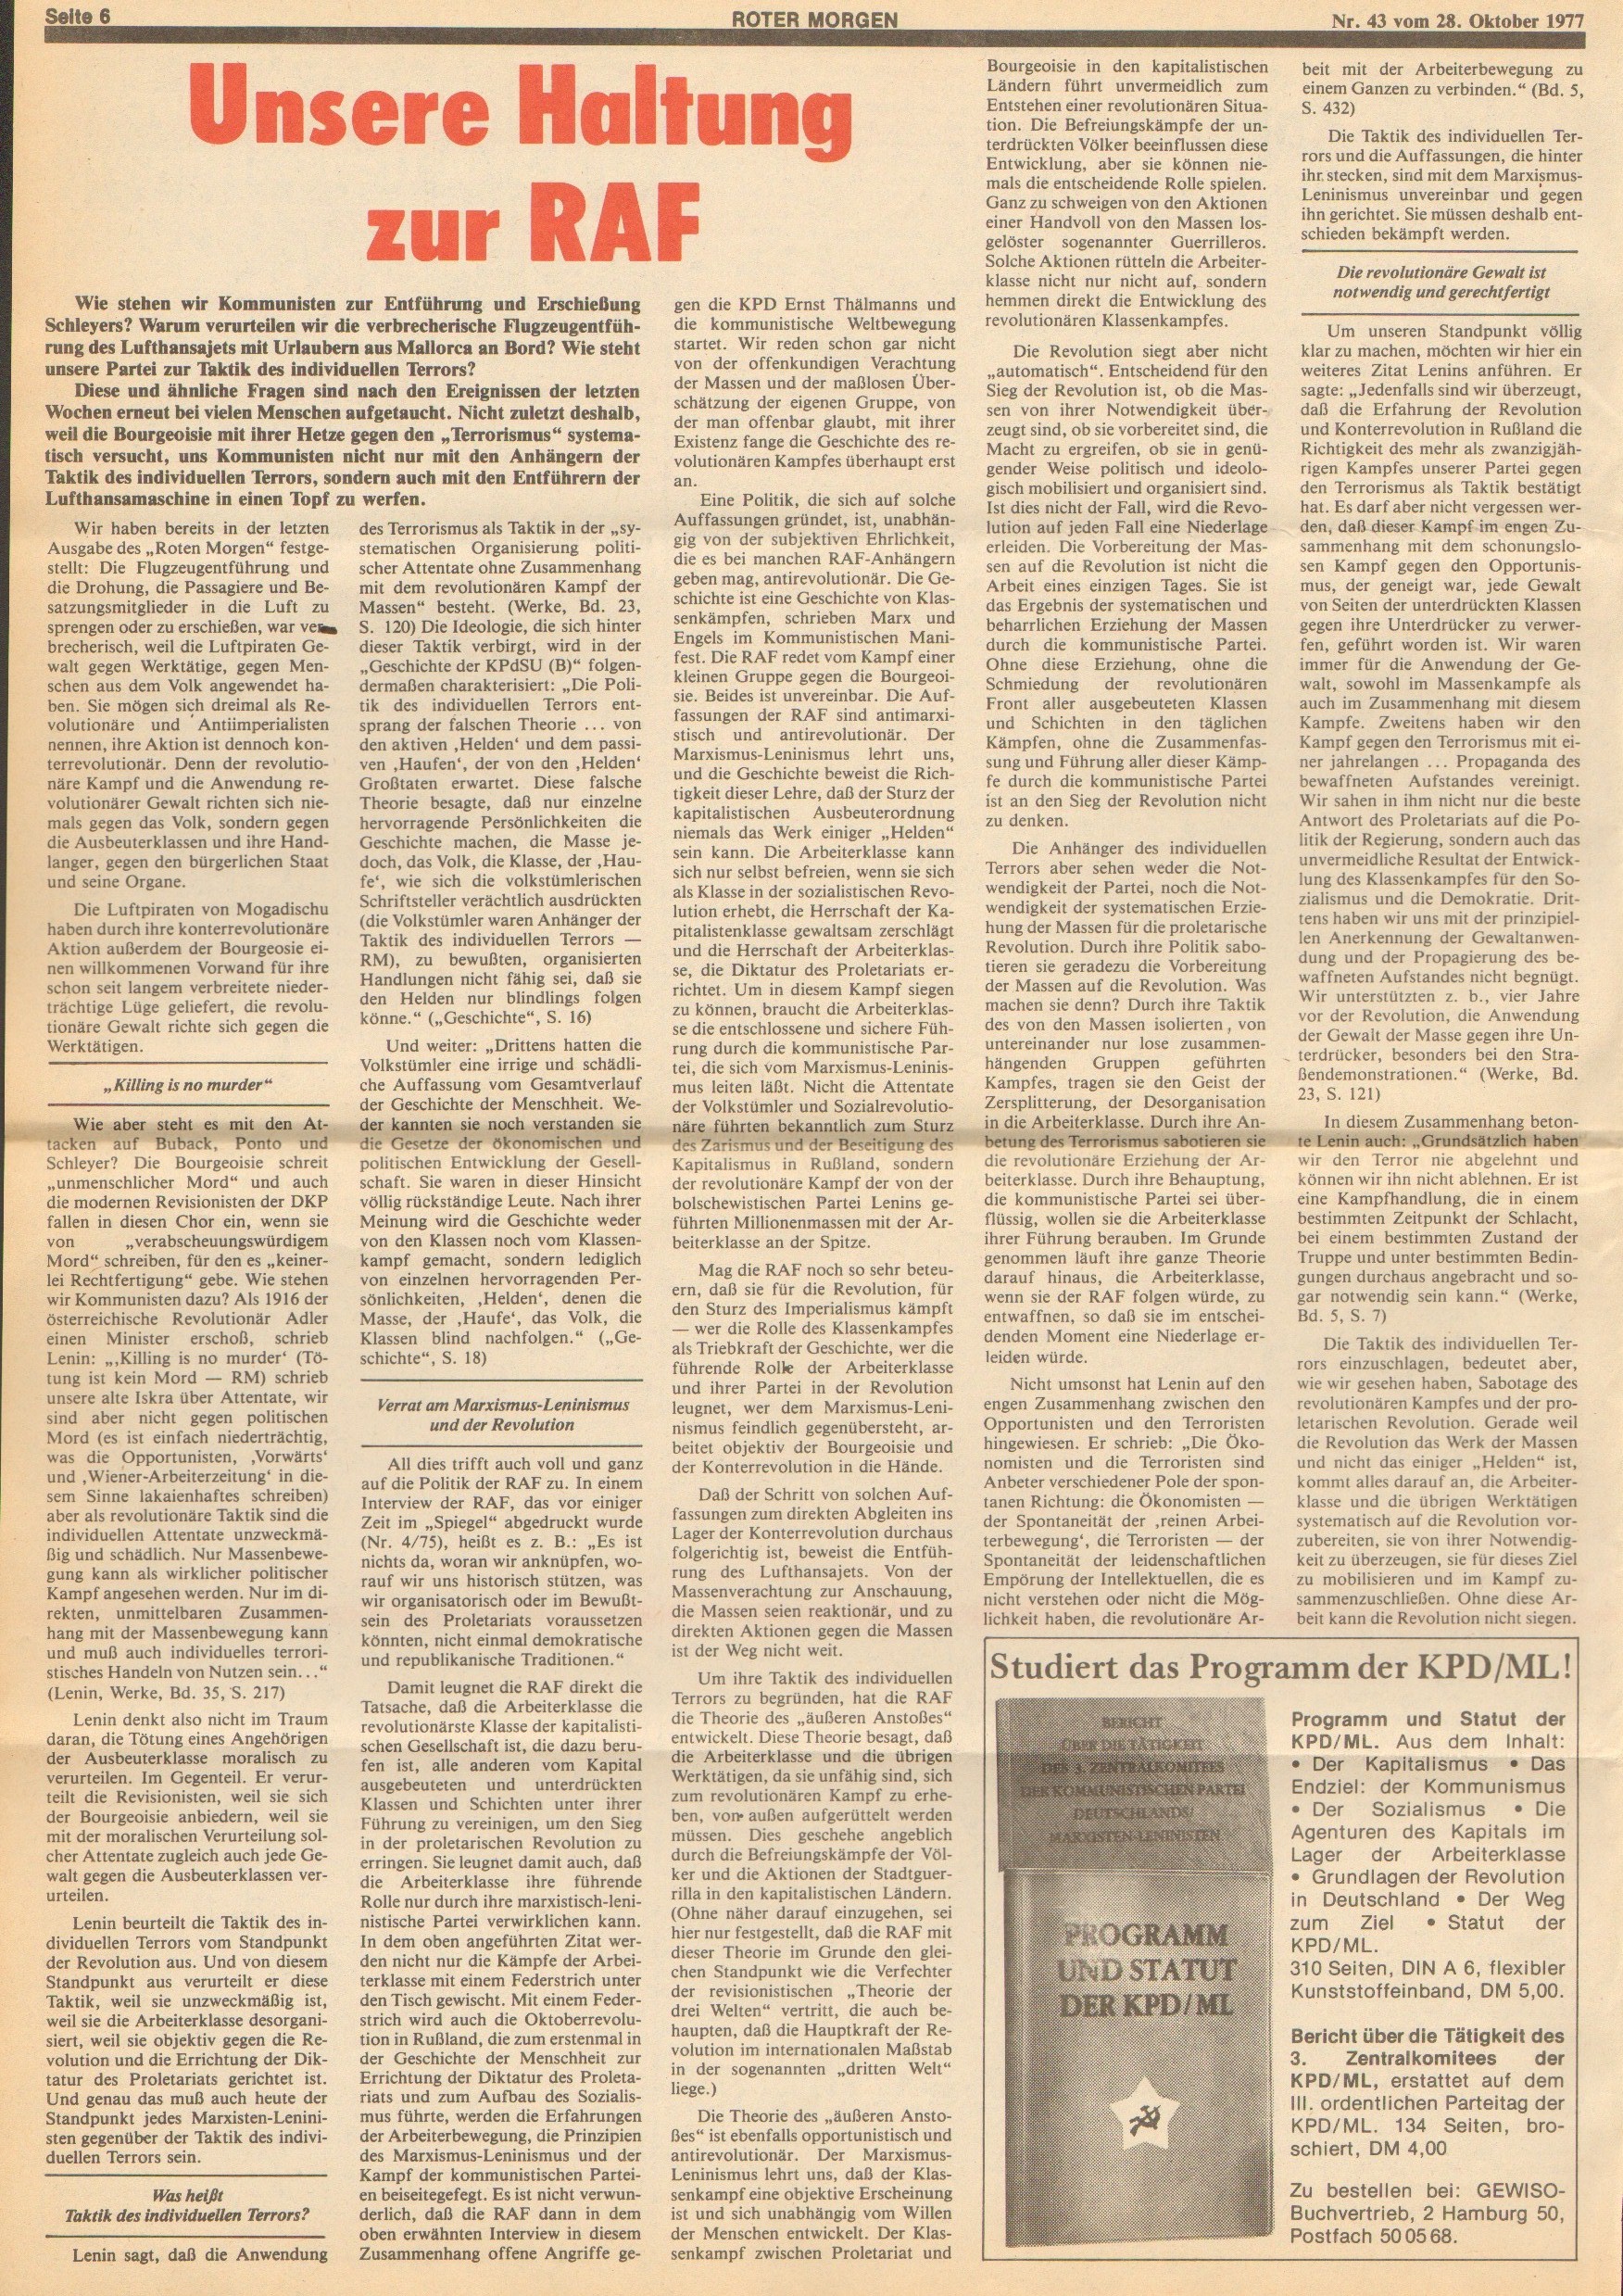 Roter Morgen, 11. Jg., 28. Oktober 1977, Nr. 43, Seite 6